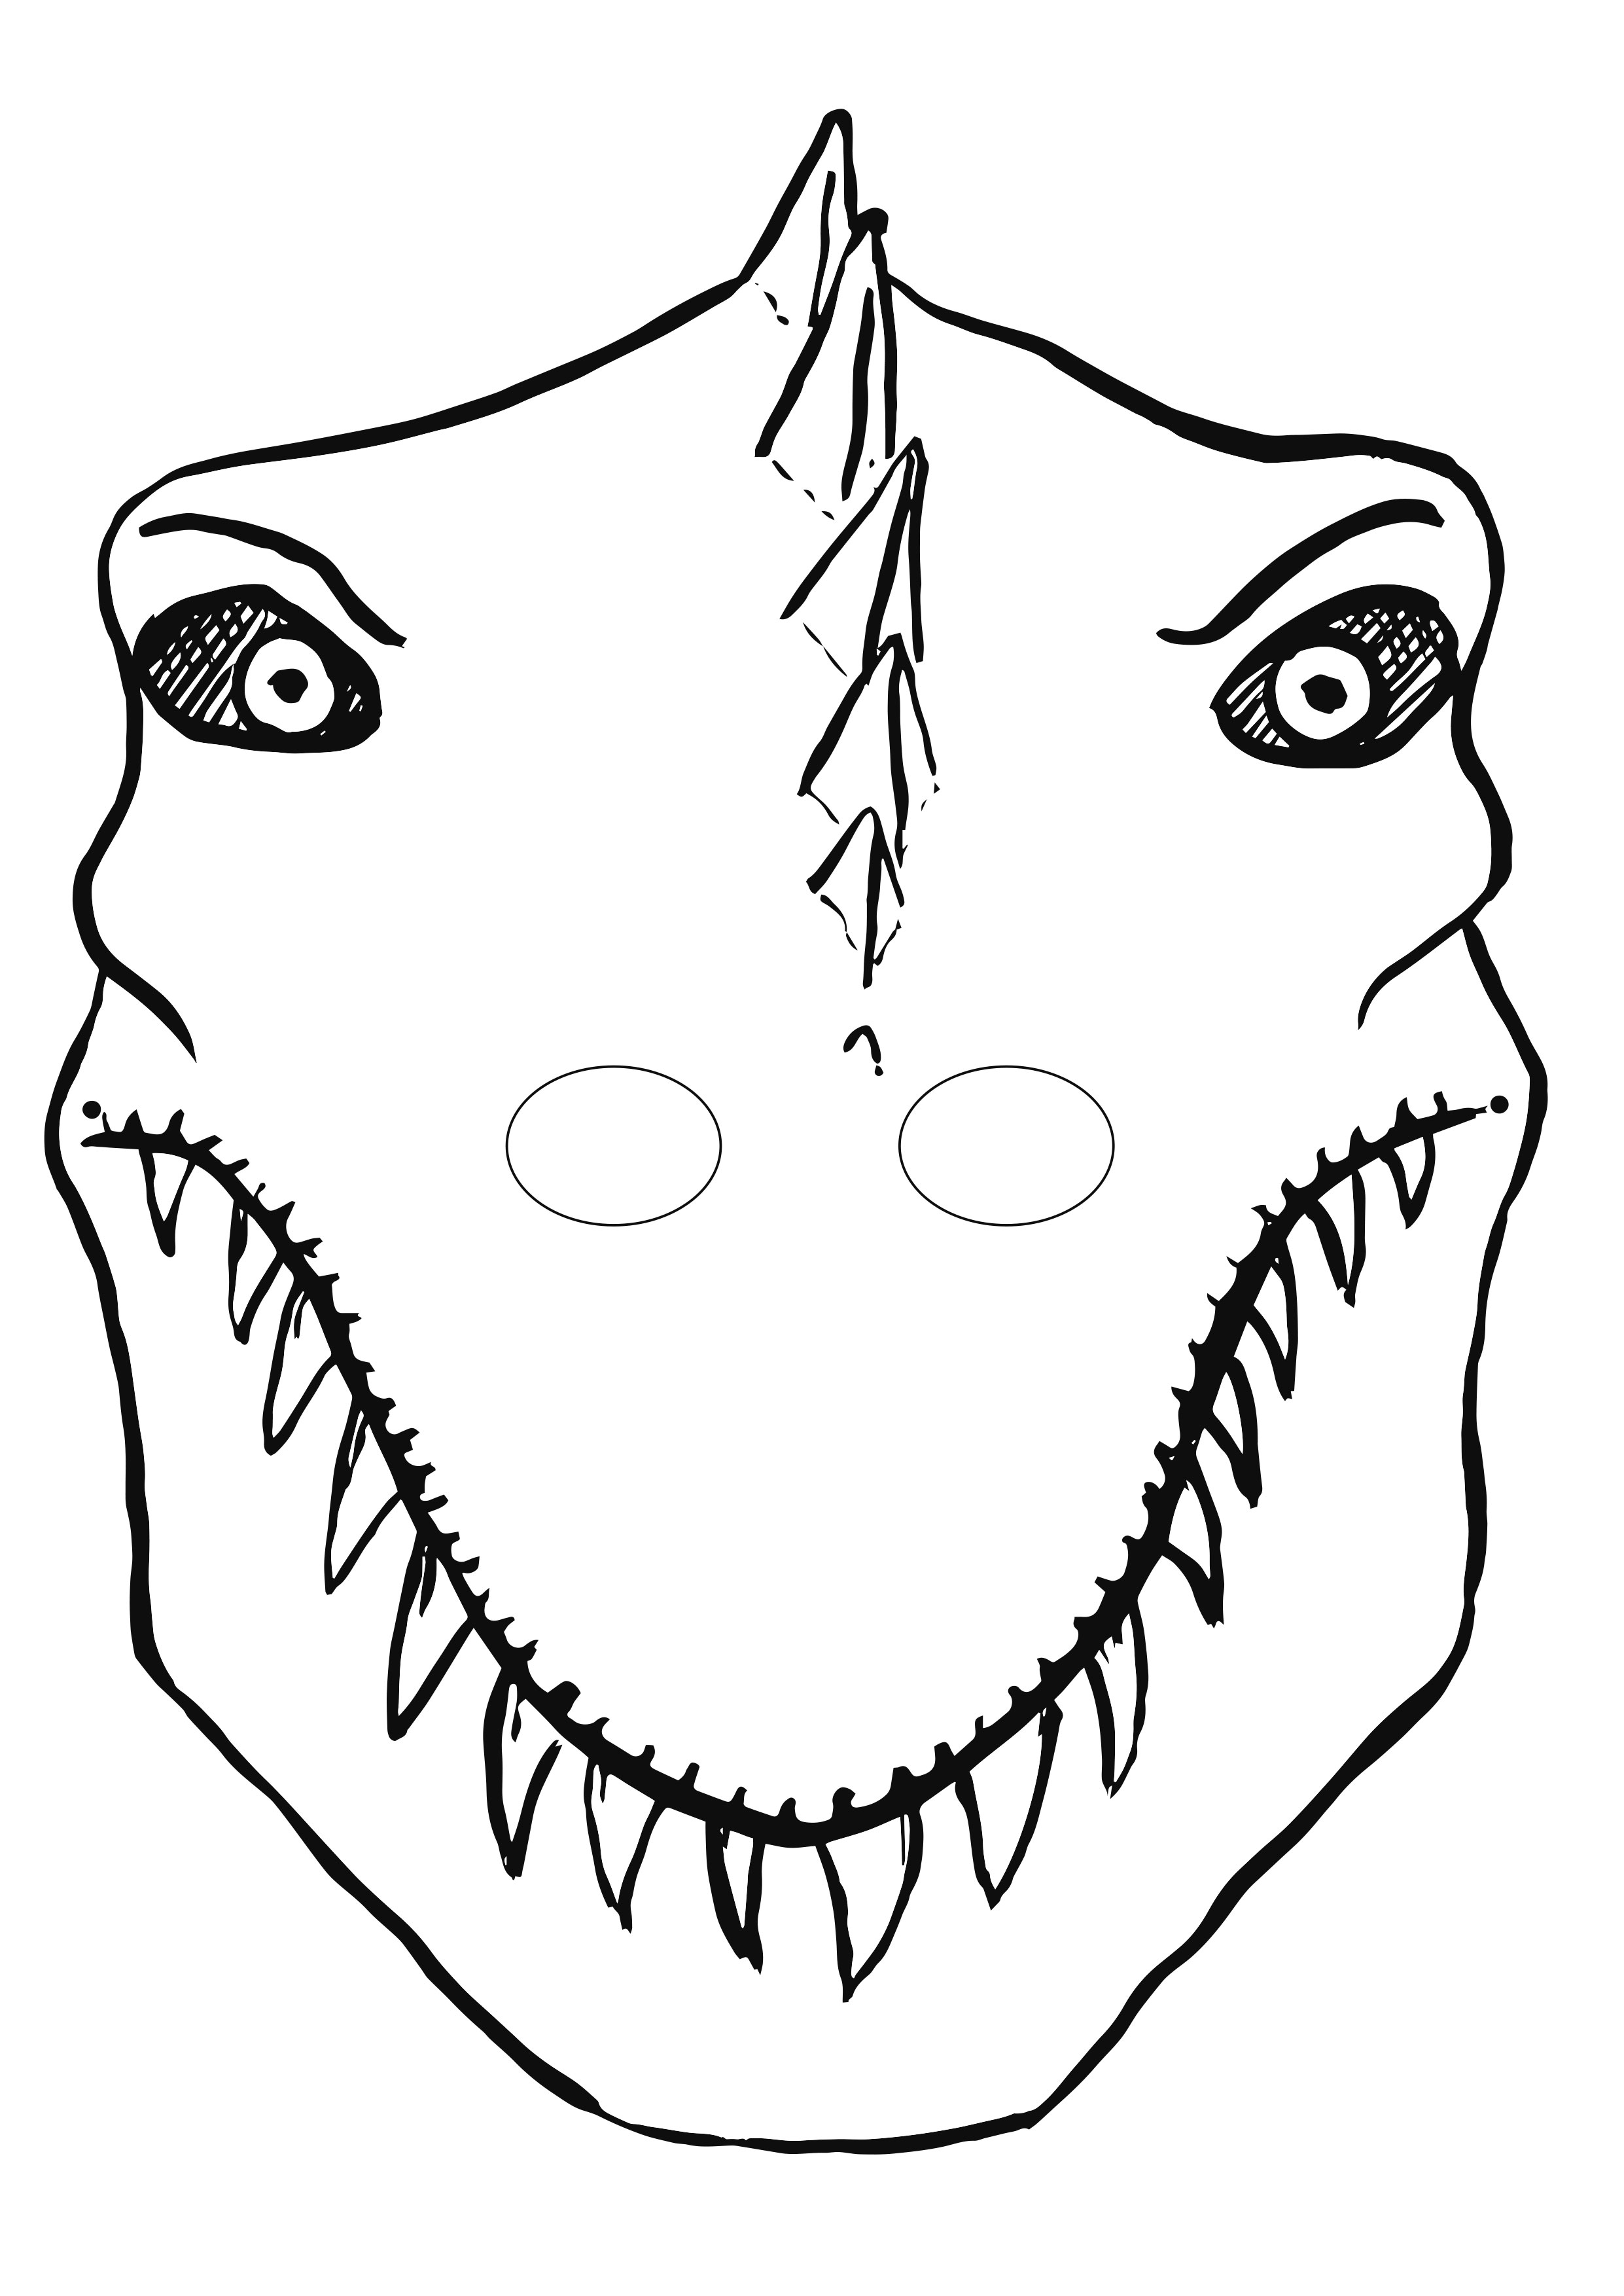 An outline illustration of a cartoon T rex  in black ink